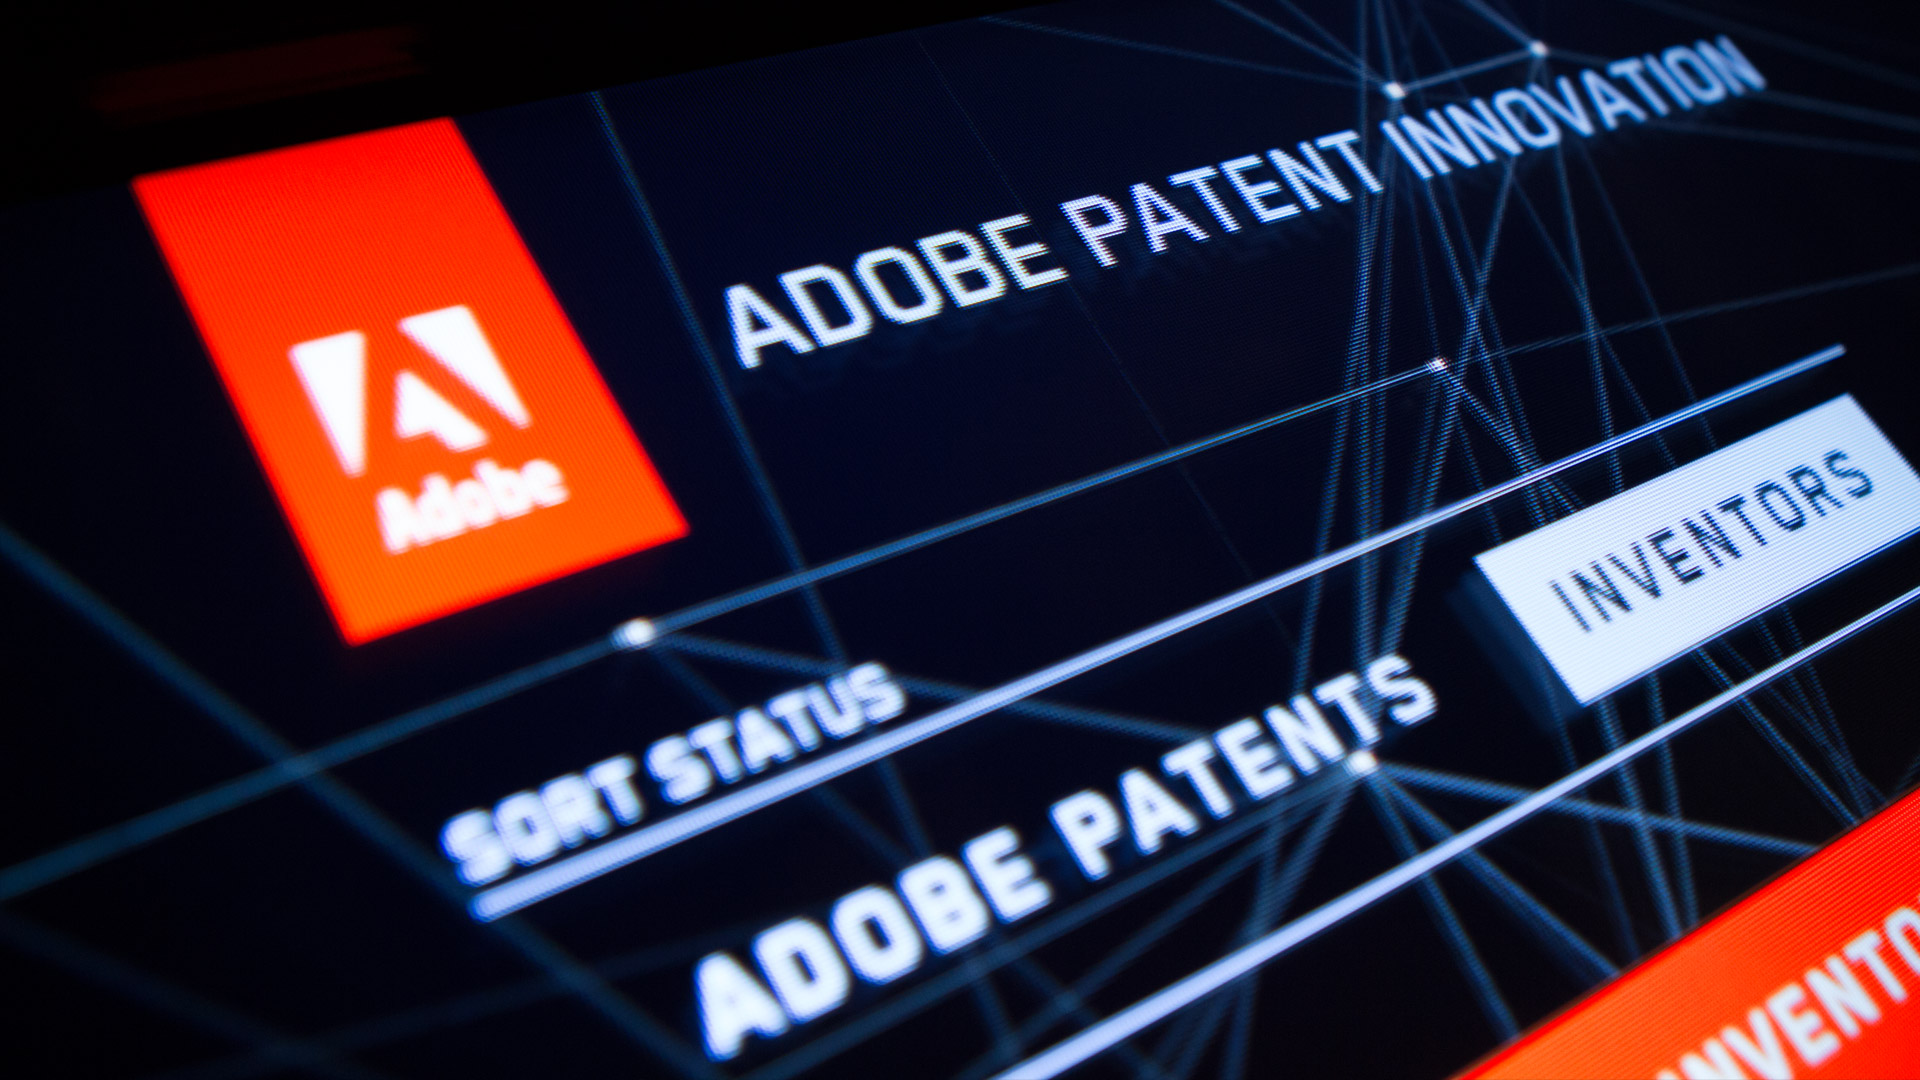 Adobe Patent Experience